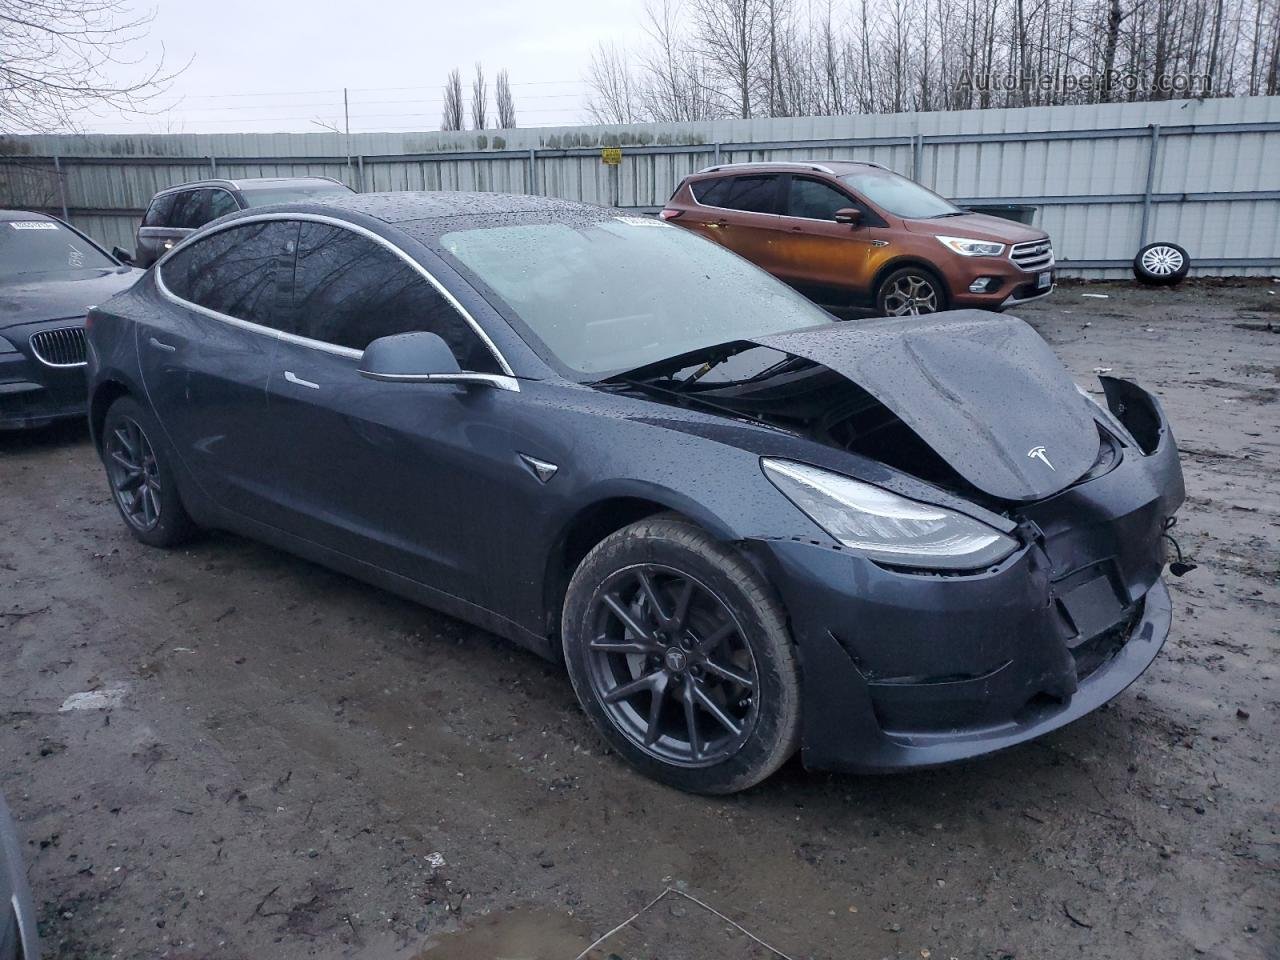 2019 Tesla Model 3  Черный vin: 5YJ3E1EB0KF510299